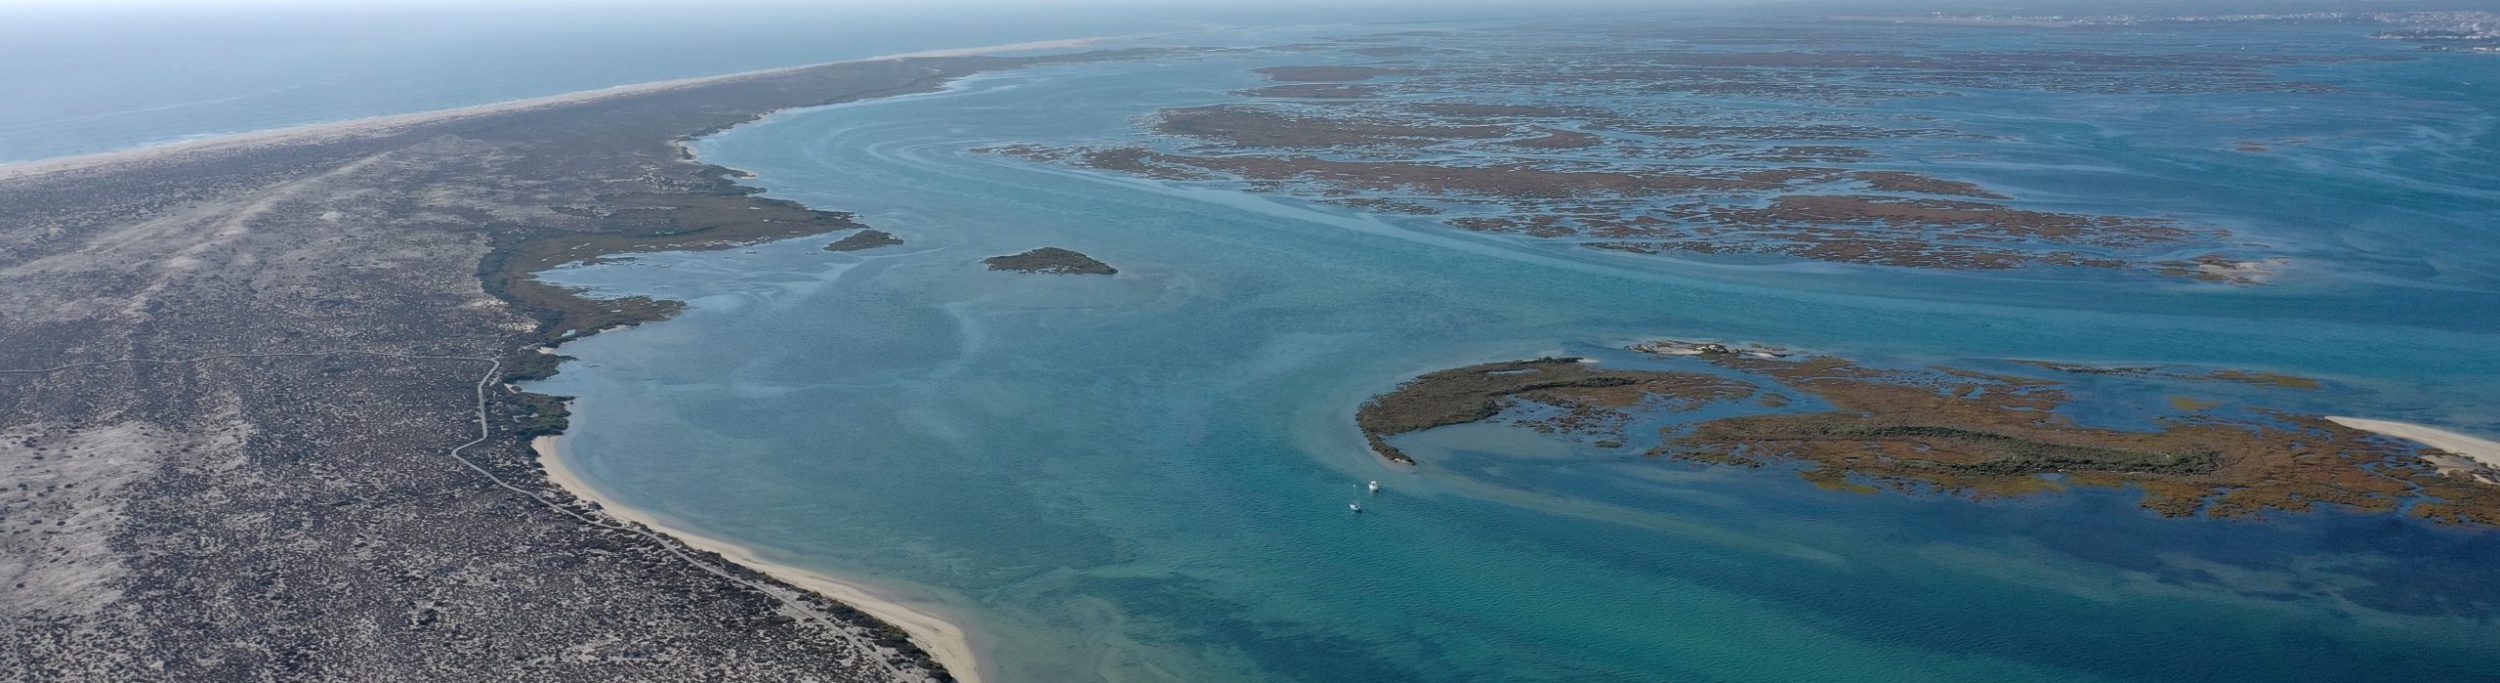 Barrier islands: crucial ecossystem